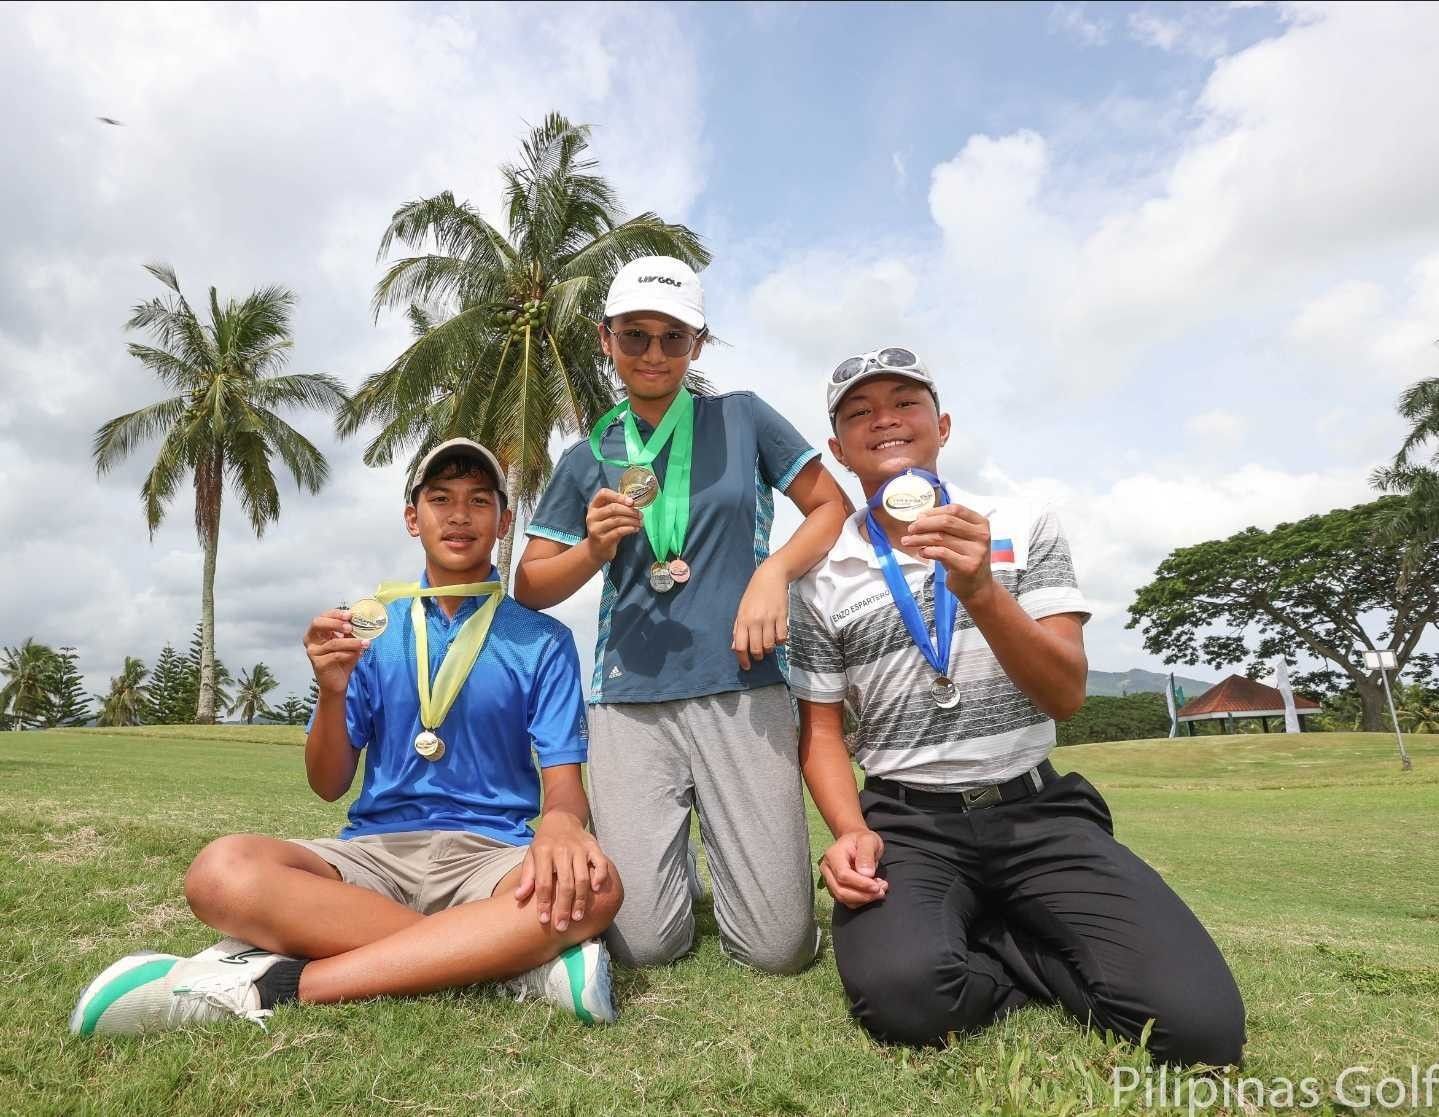 Espartero, 2 others triumph in JPGT Malarayat golf tilt